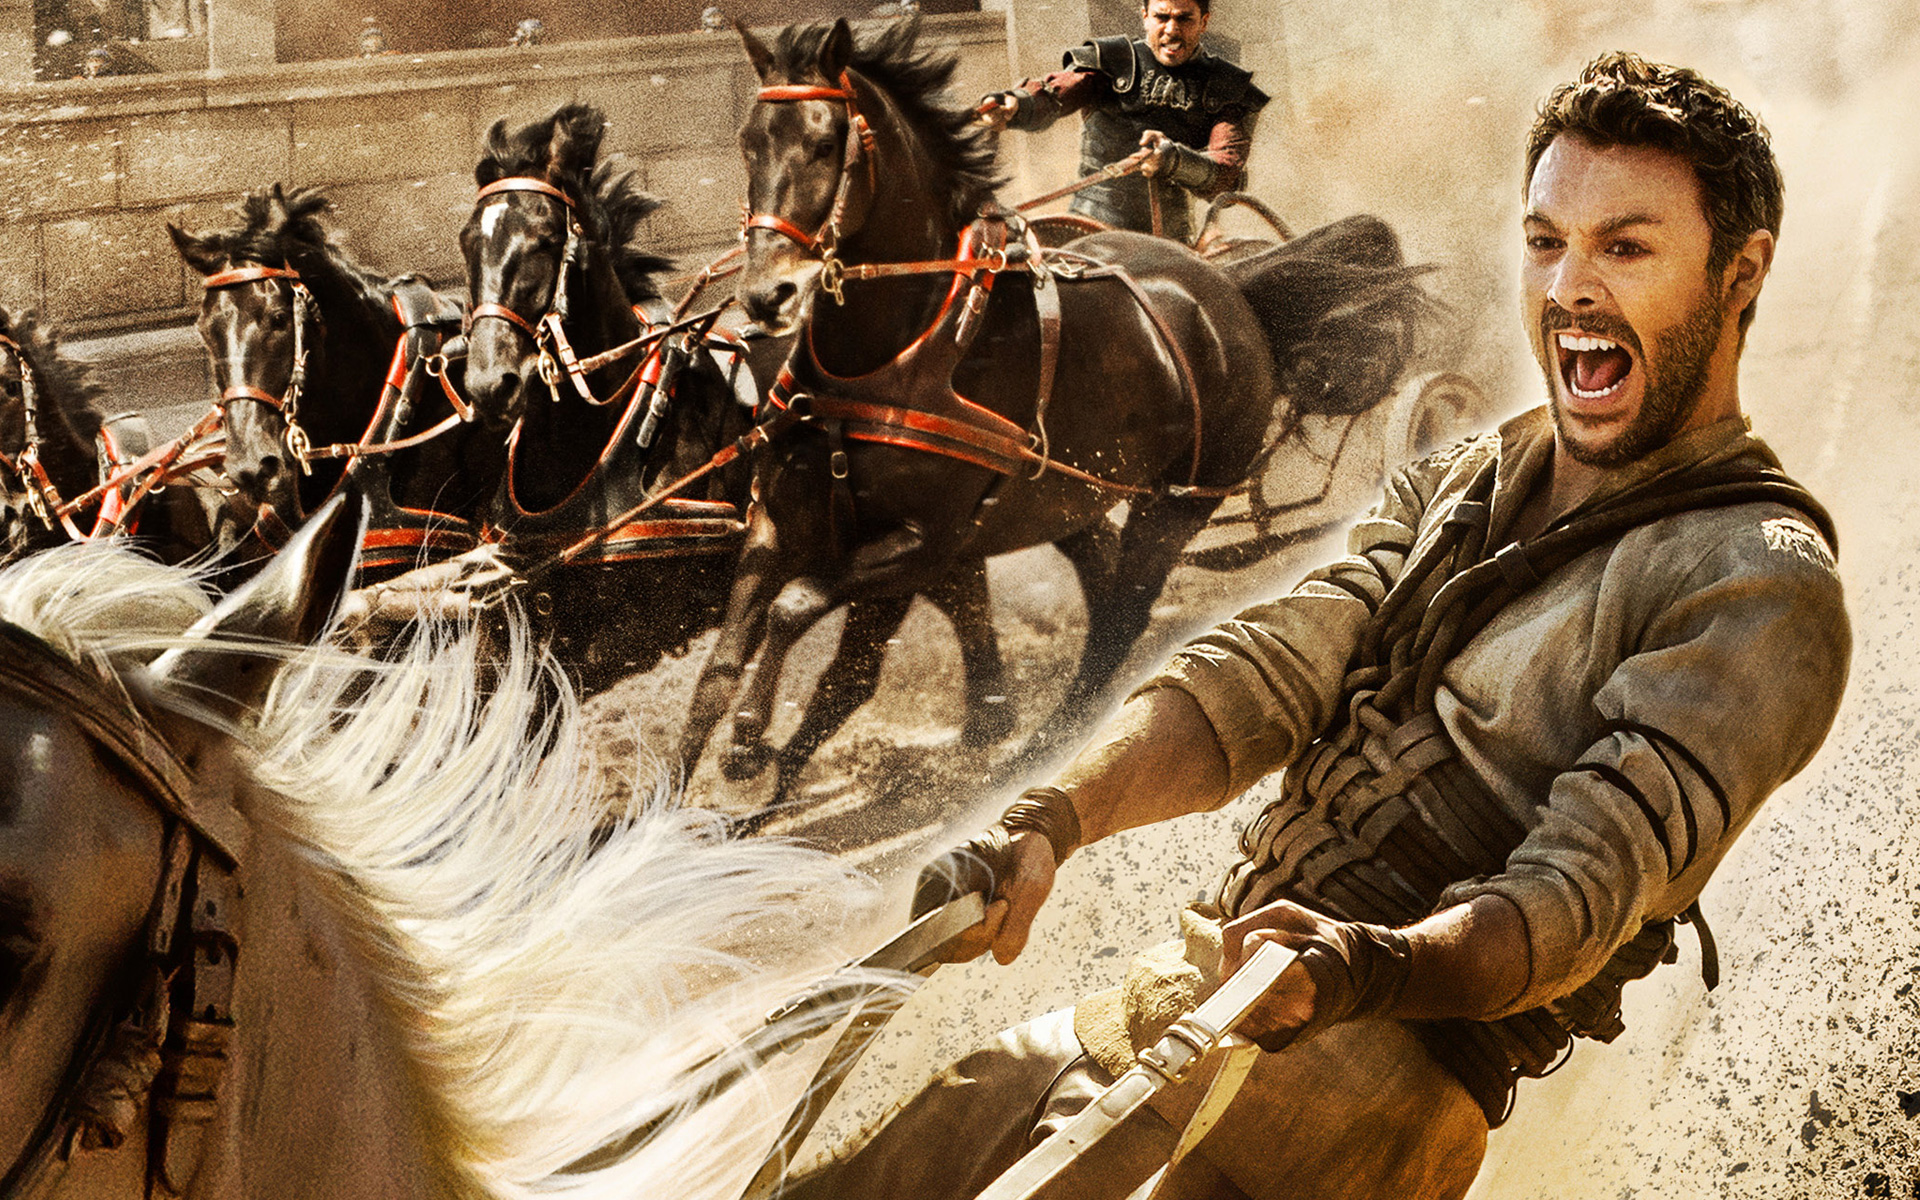 El espectacular remake de 'Ben-Hur', estreno estelar de la semana